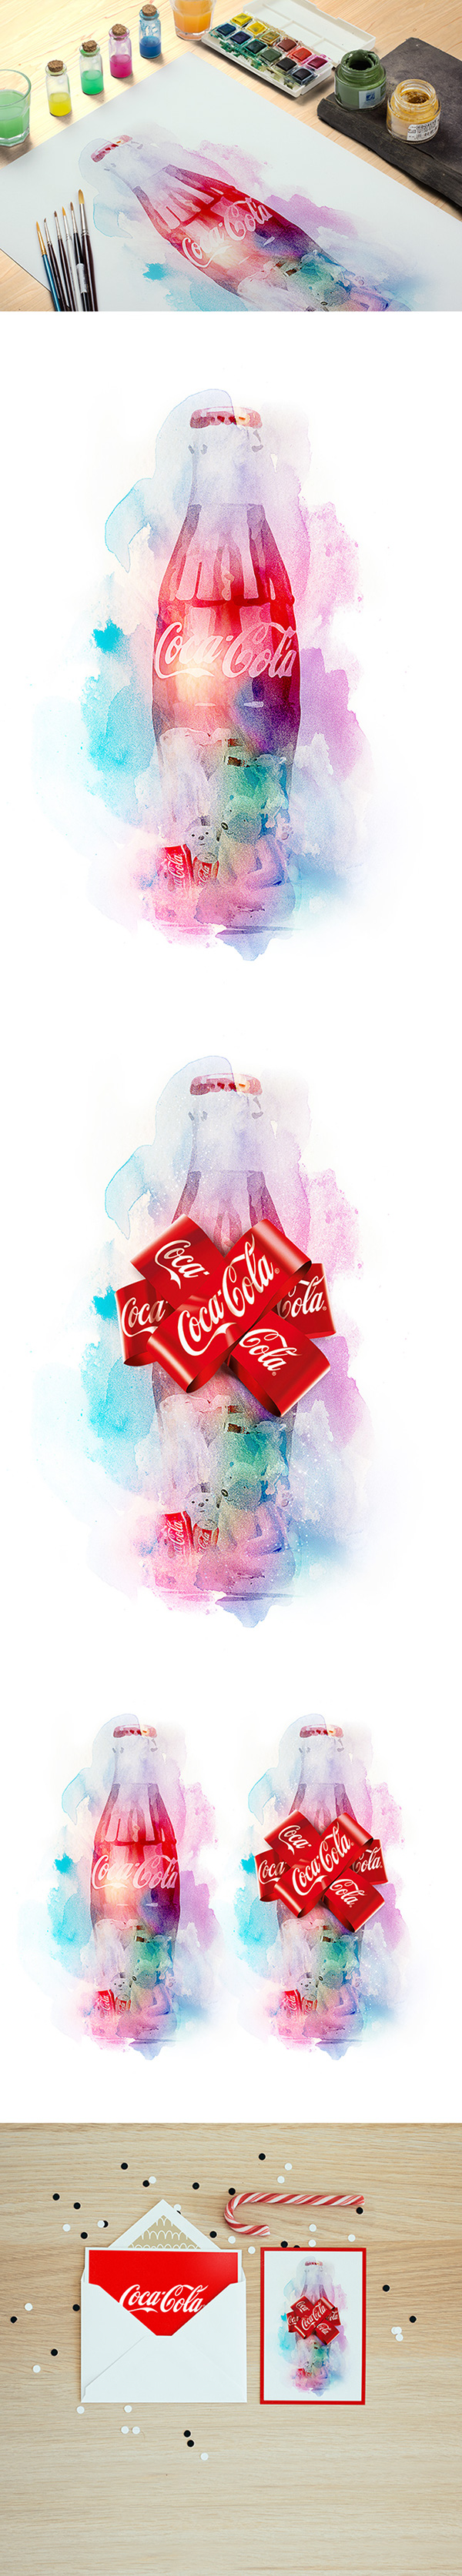 Coca-Cola / Christmas illustration